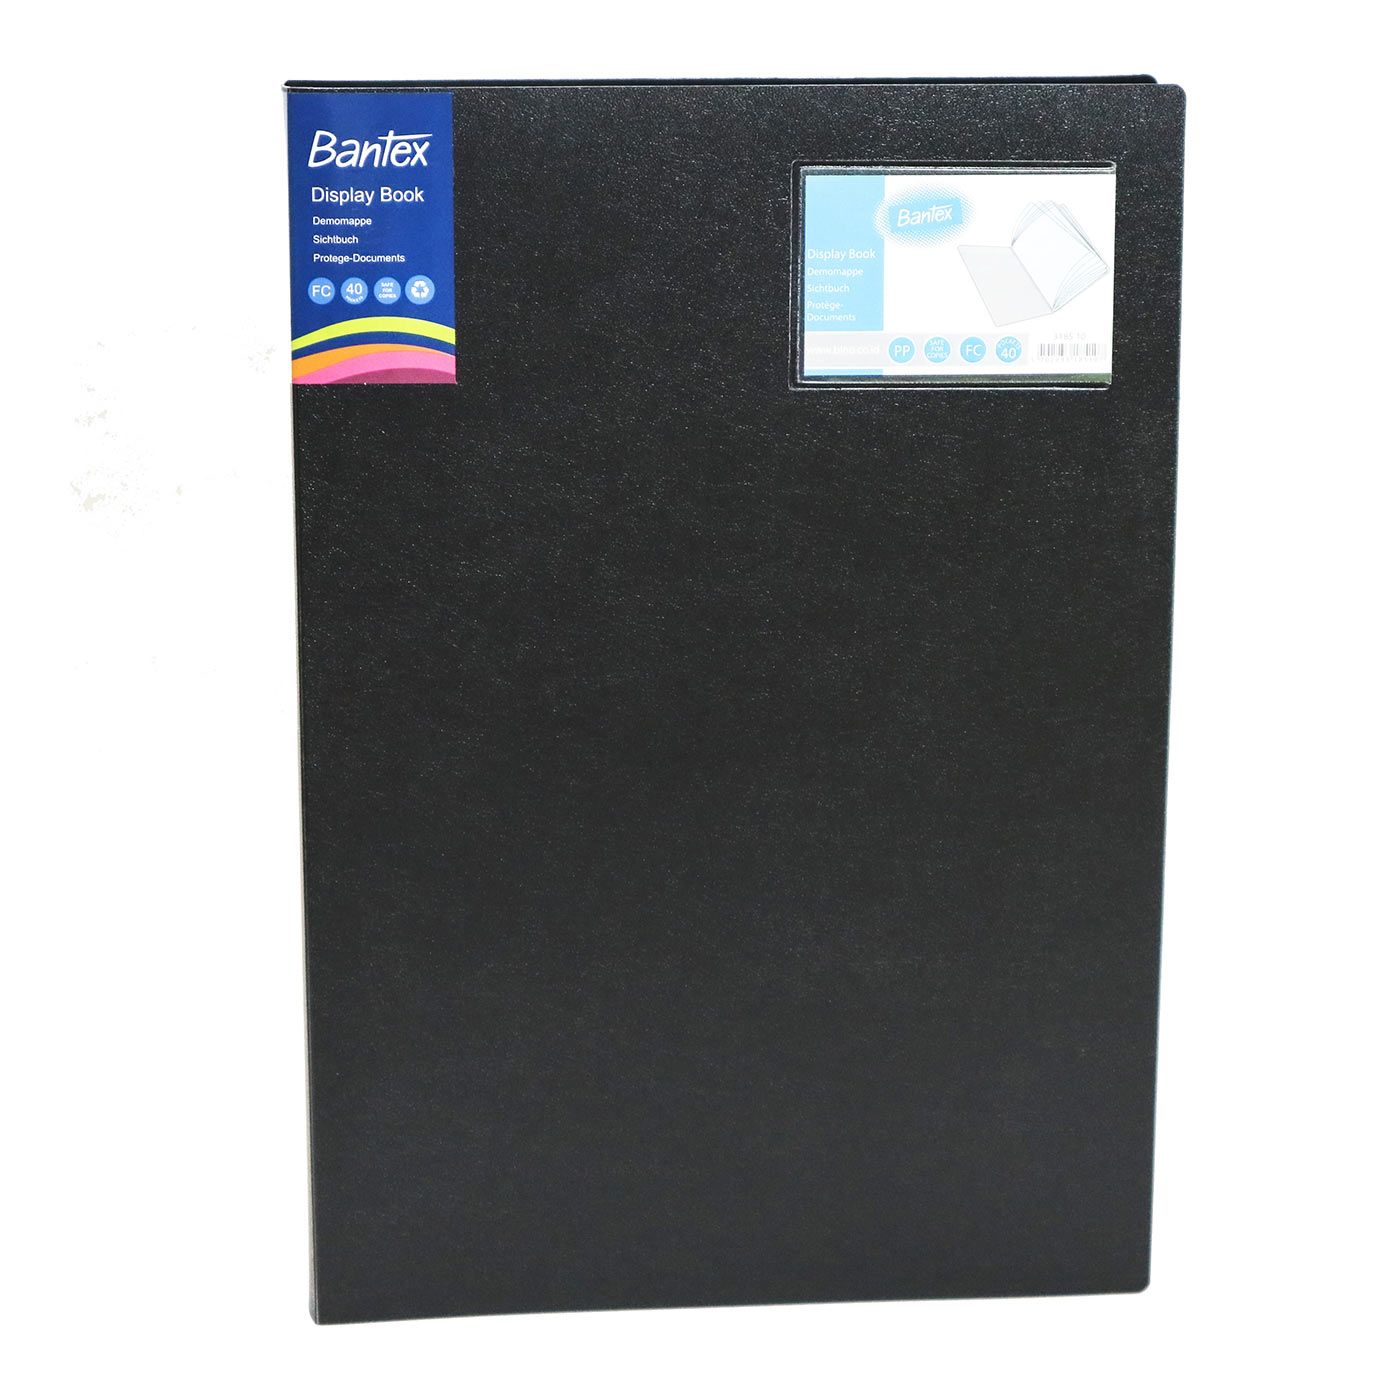 Bantex Standard Display Book 40 Pockets Fc - 3185 10 - 2